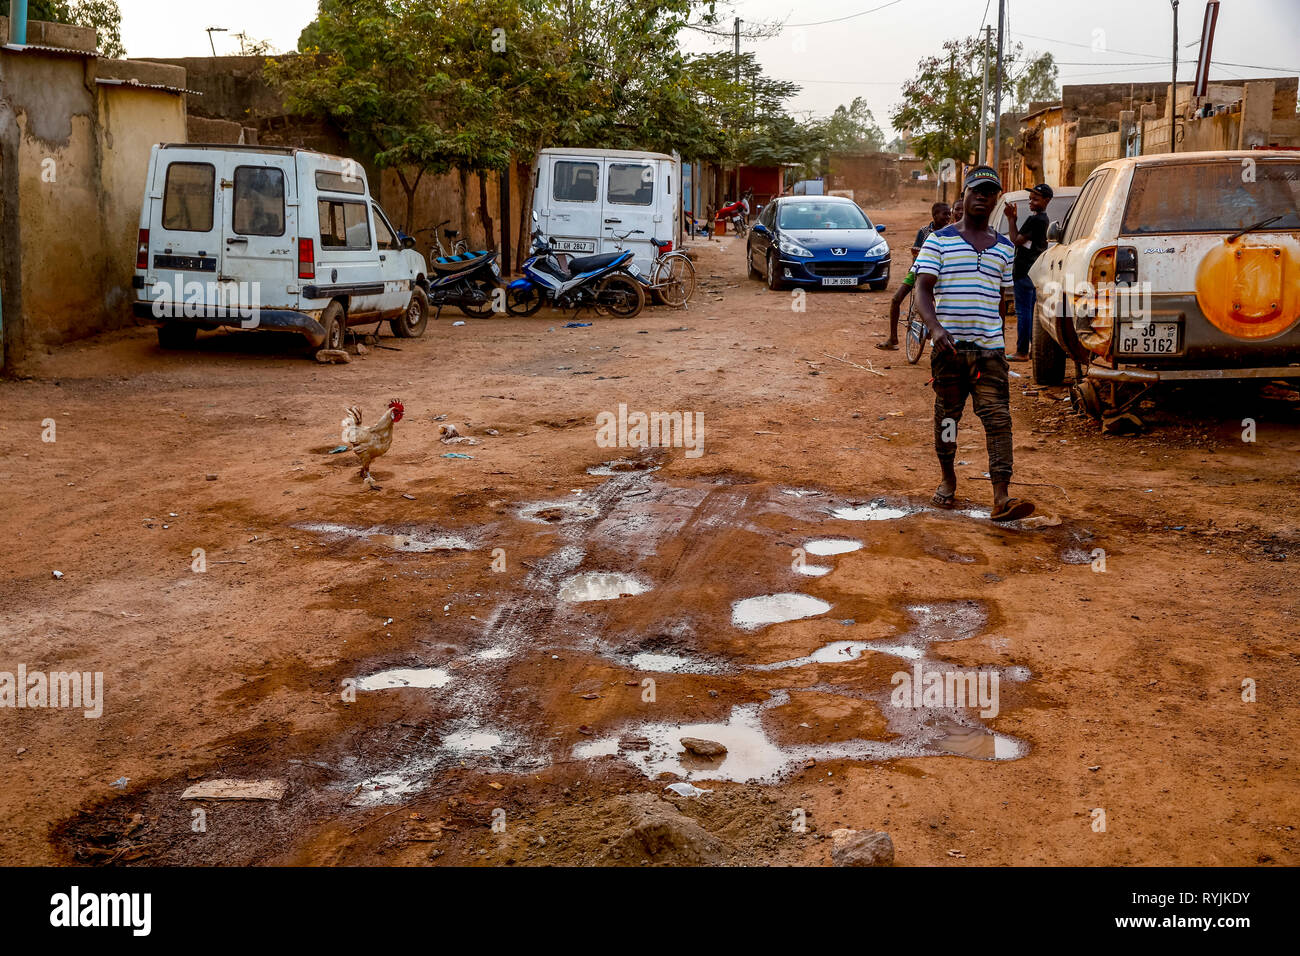 Pot-holed road in Ouagadougou, Burkina Faso. Stock Photo